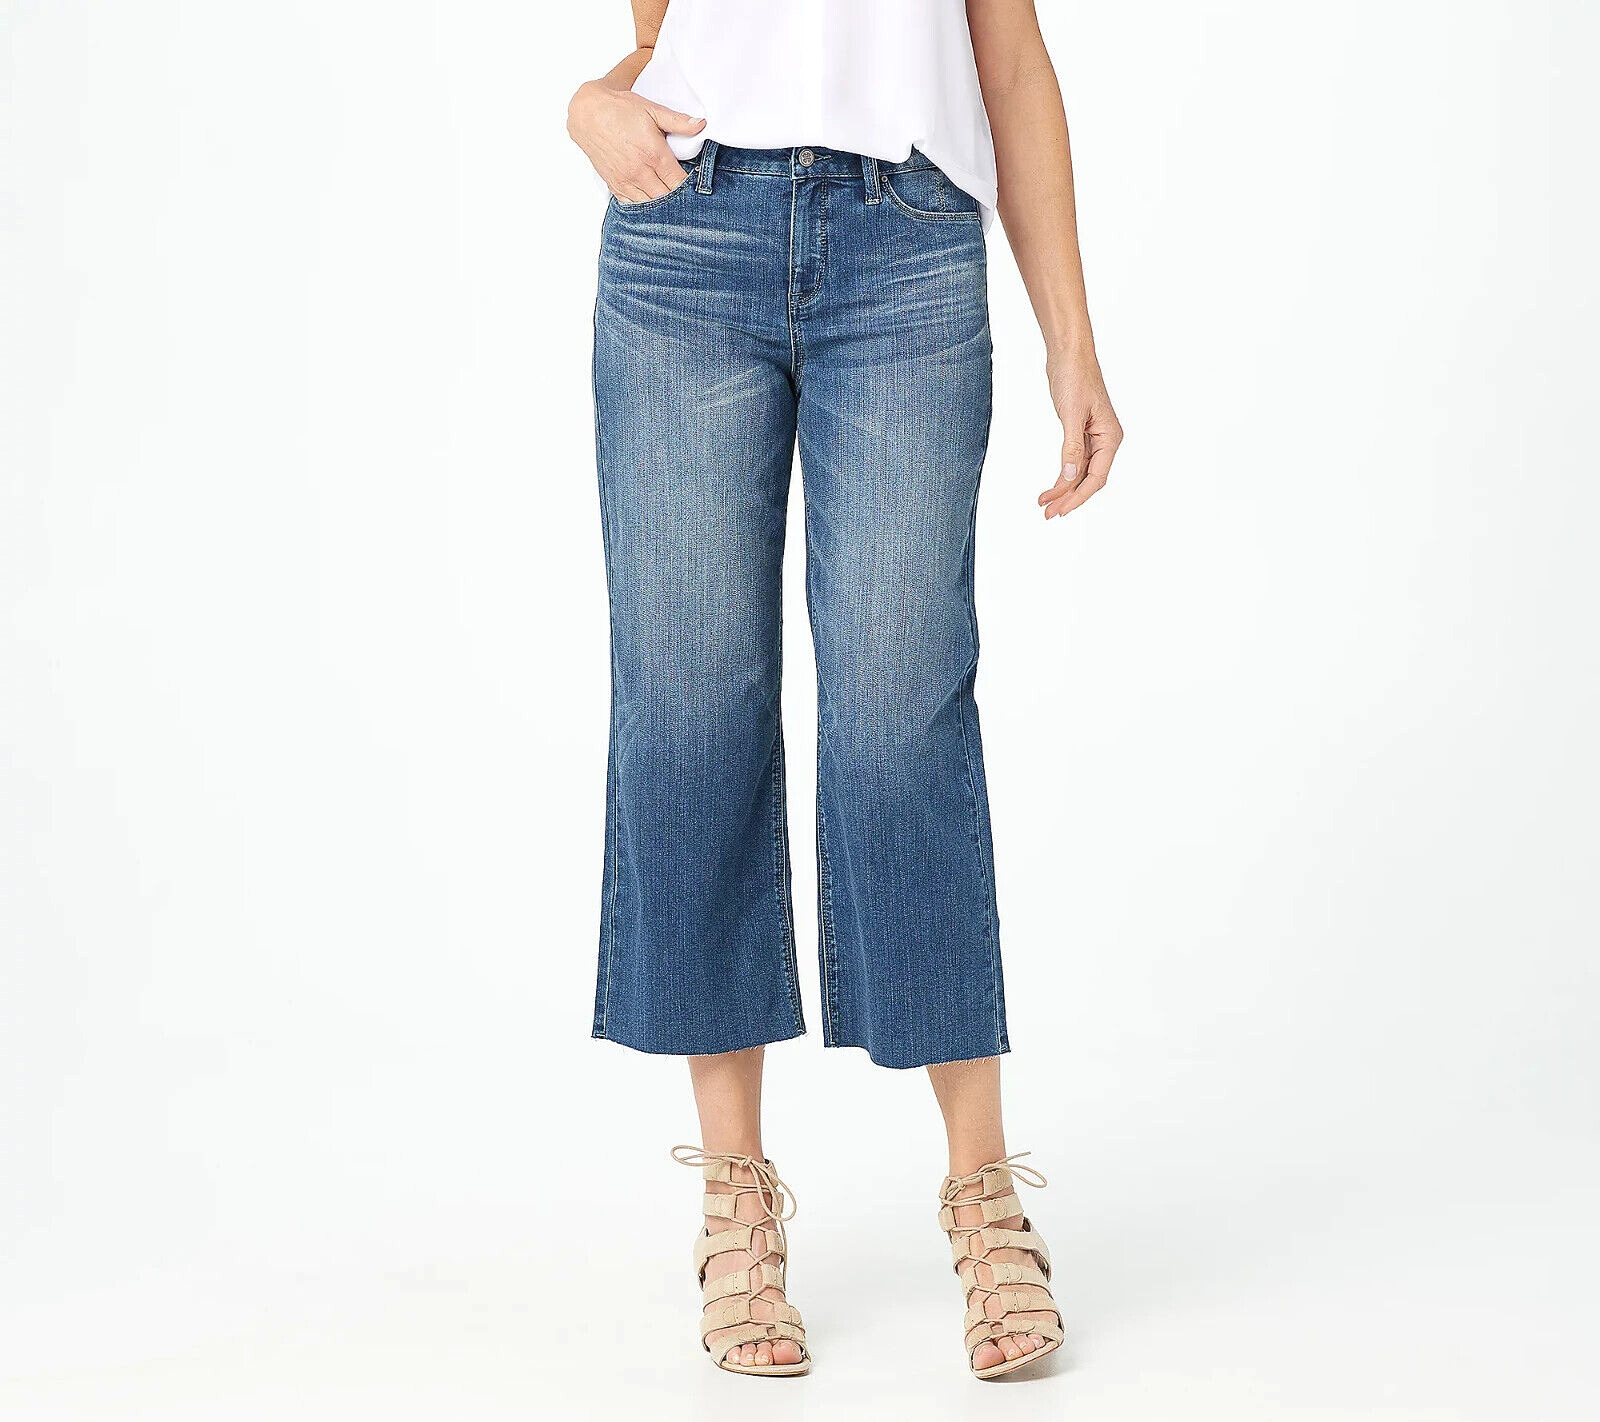 Laurie Felt Daisy Denim Wide Leg Crop Jeans- Brushed Medium, Petite 10